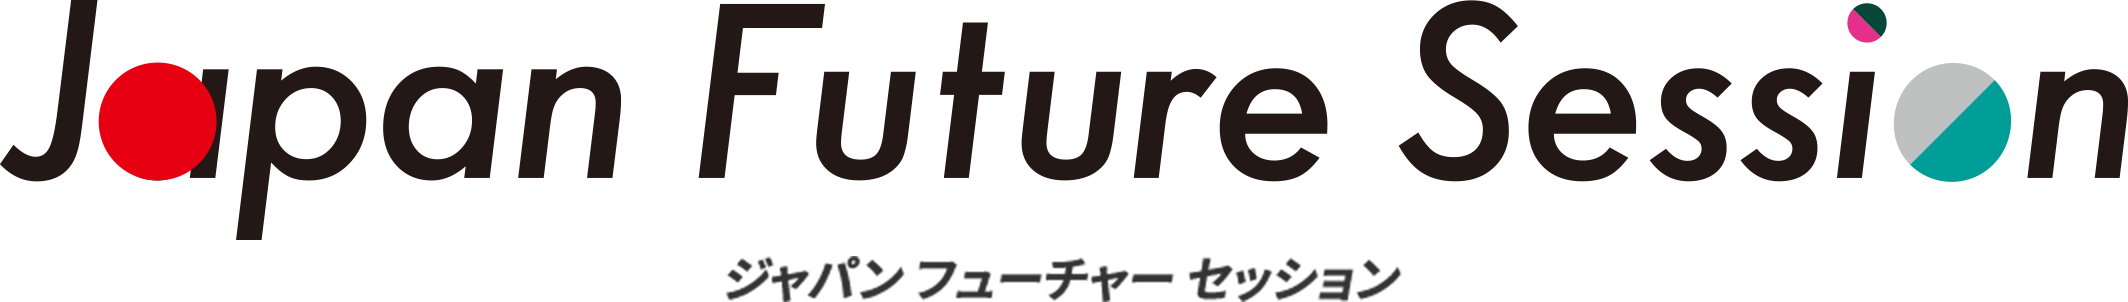 Japan Future Session